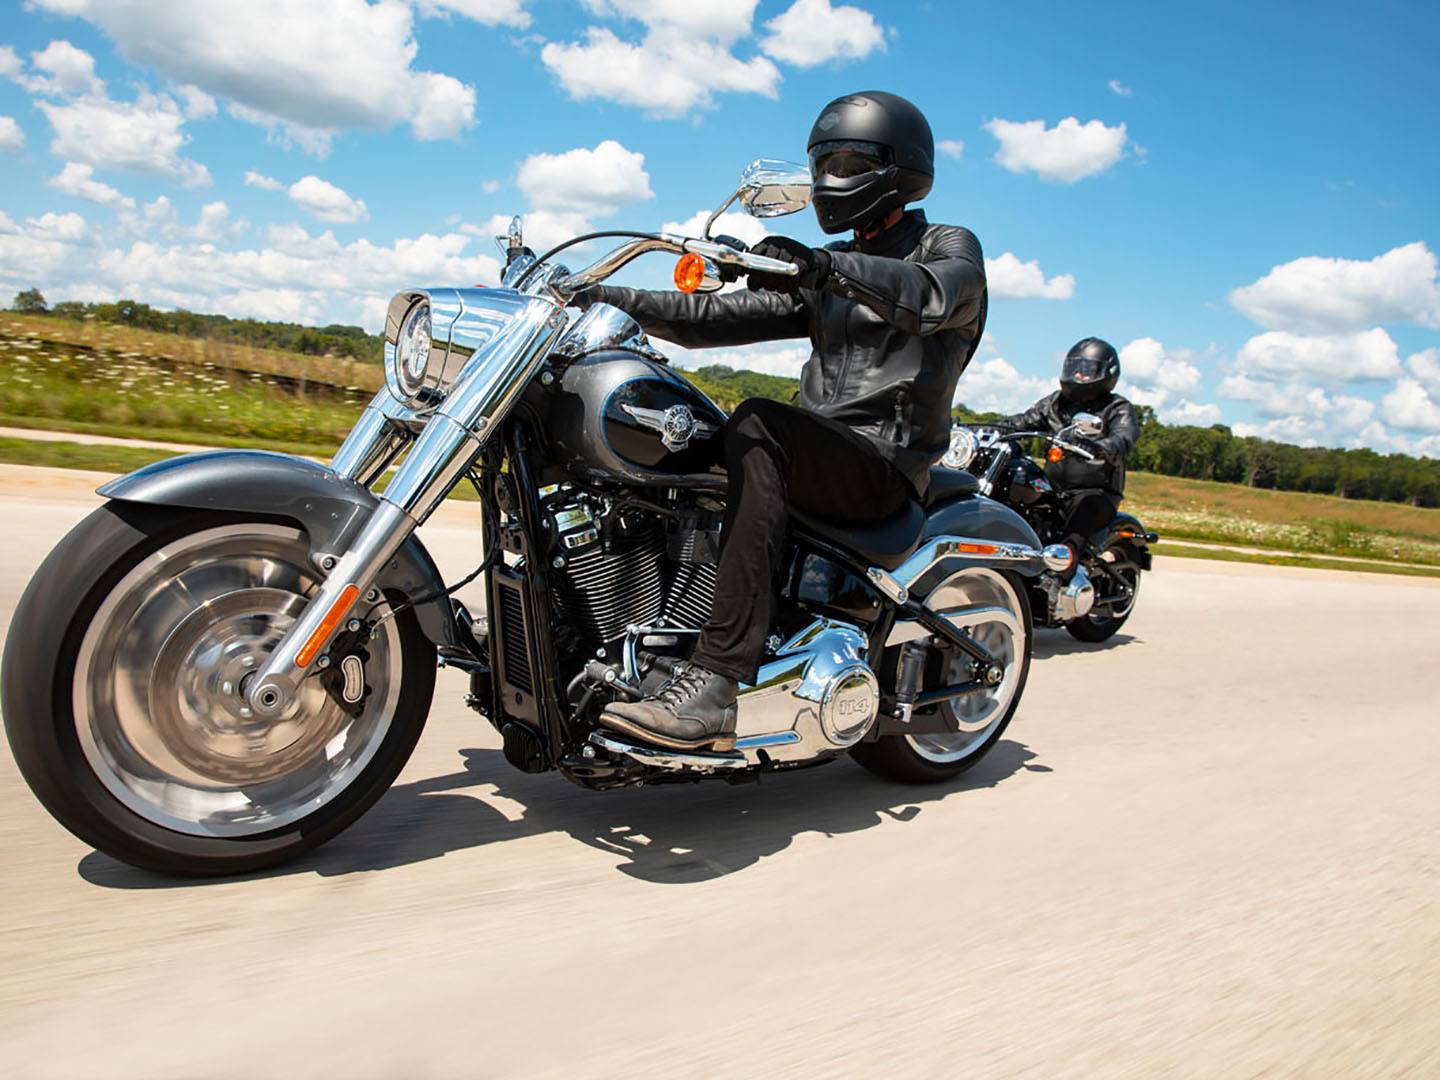 2021 Harley-Davidson Fat Boy® 114 in Marion, Illinois